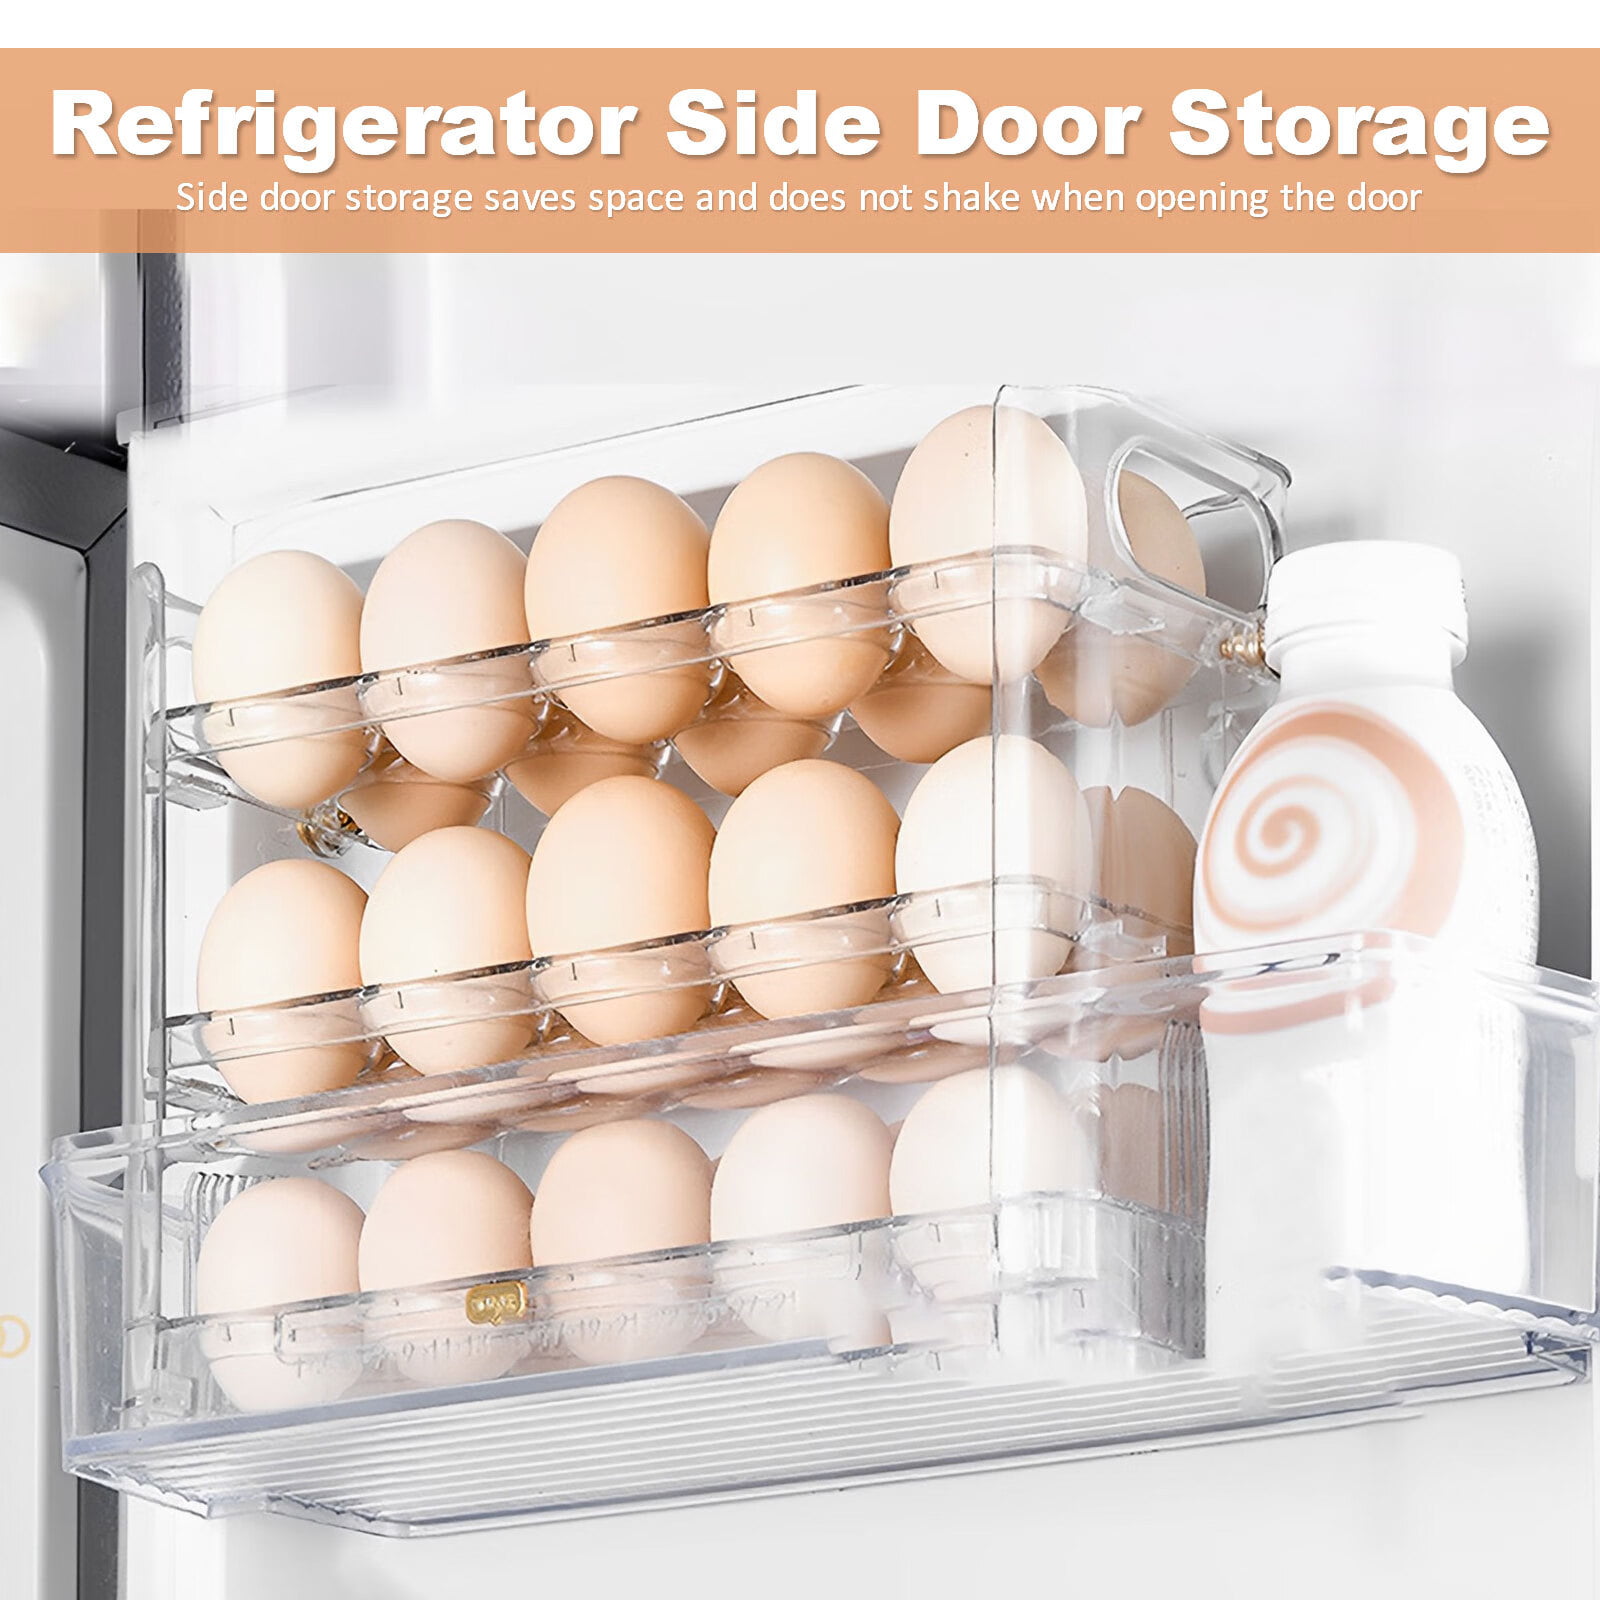 AllTopBargains 1 Kitchen Egg Tray 18 Slot Eggs Holder Lid Container Fridge Refrigerator Storage